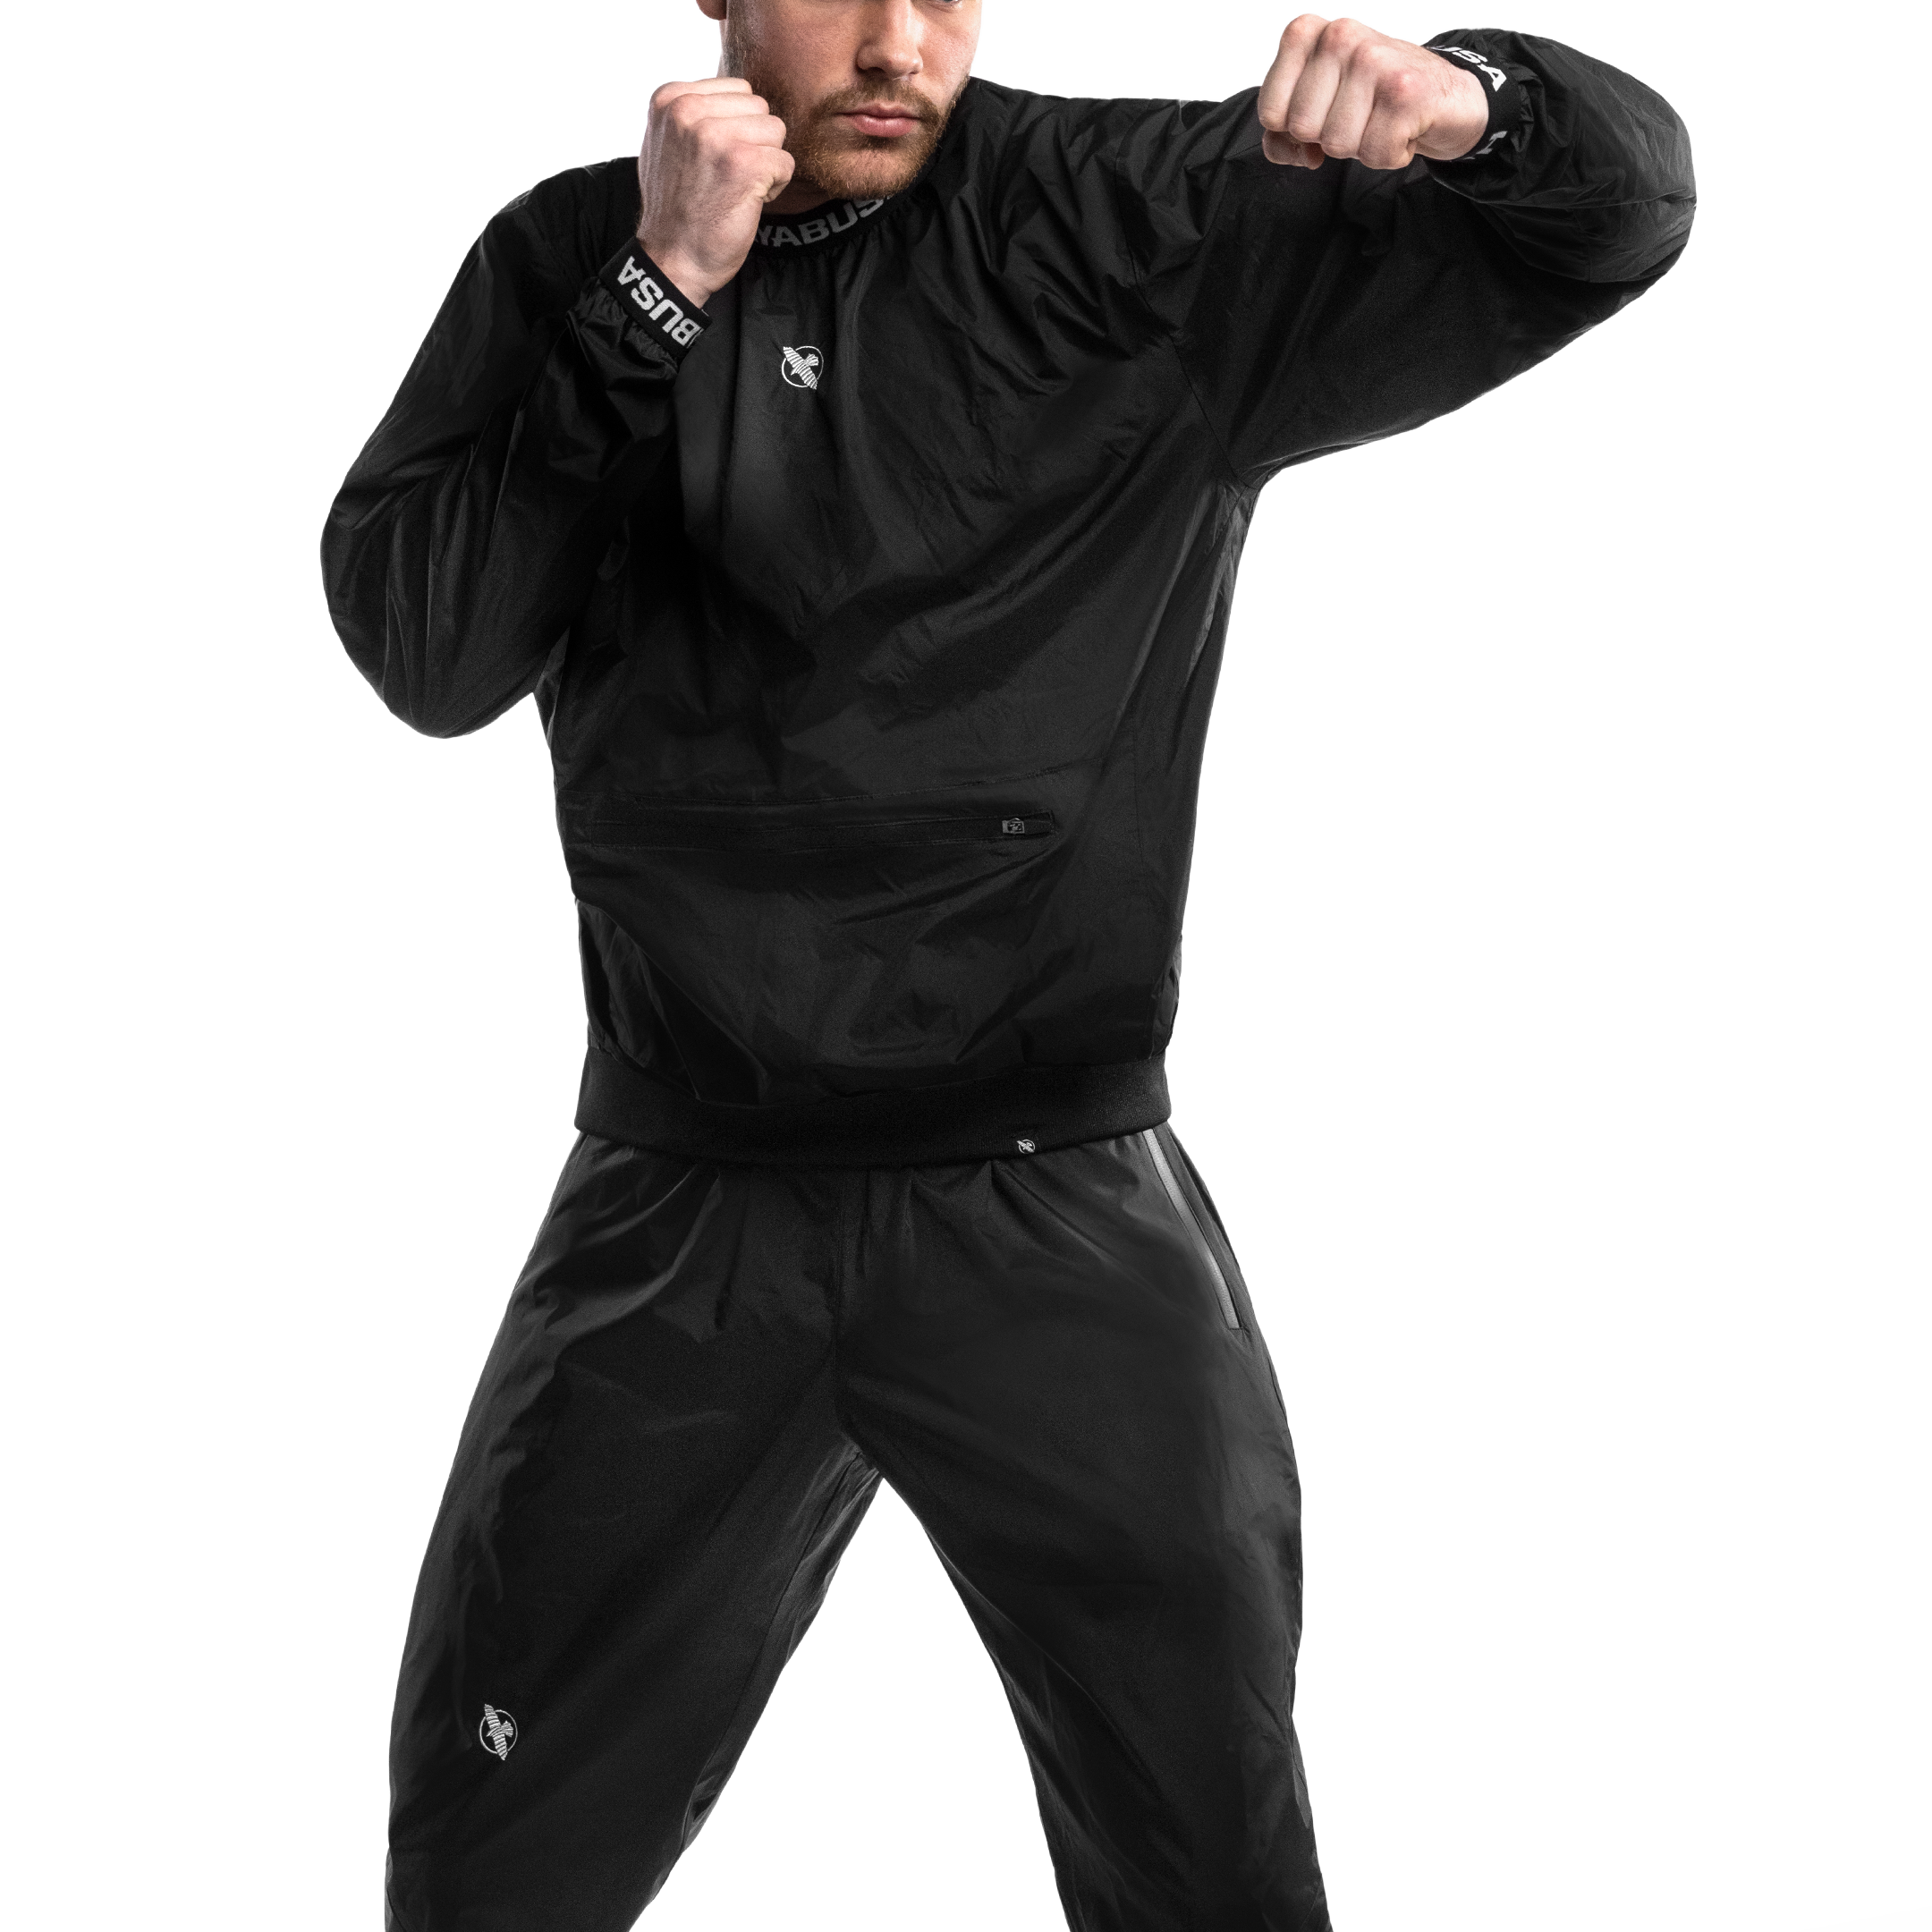 Hayabusa Ashi MMA Foot Grips, Small/Medium, Black Review  Martial arts  training equipment, Martial arts gear, Fight wear